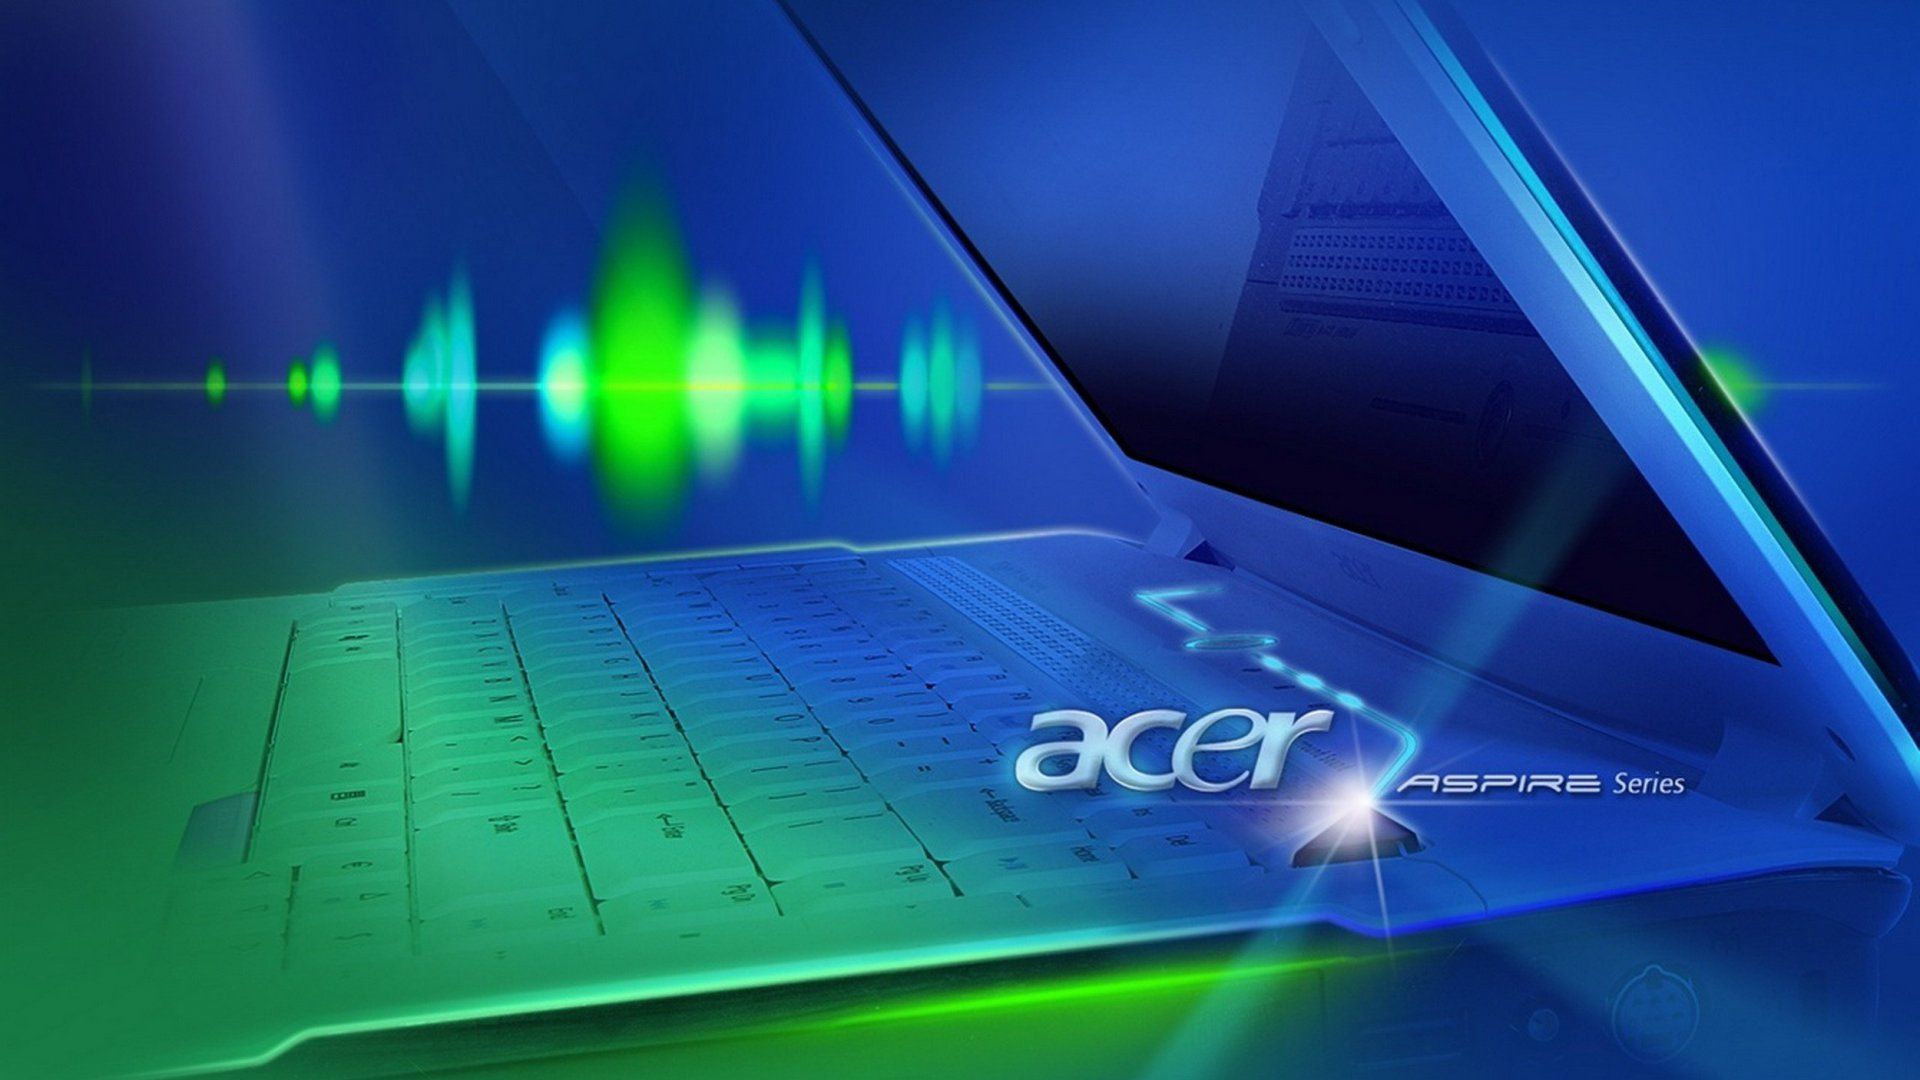 Acer Desktop Wallpaper